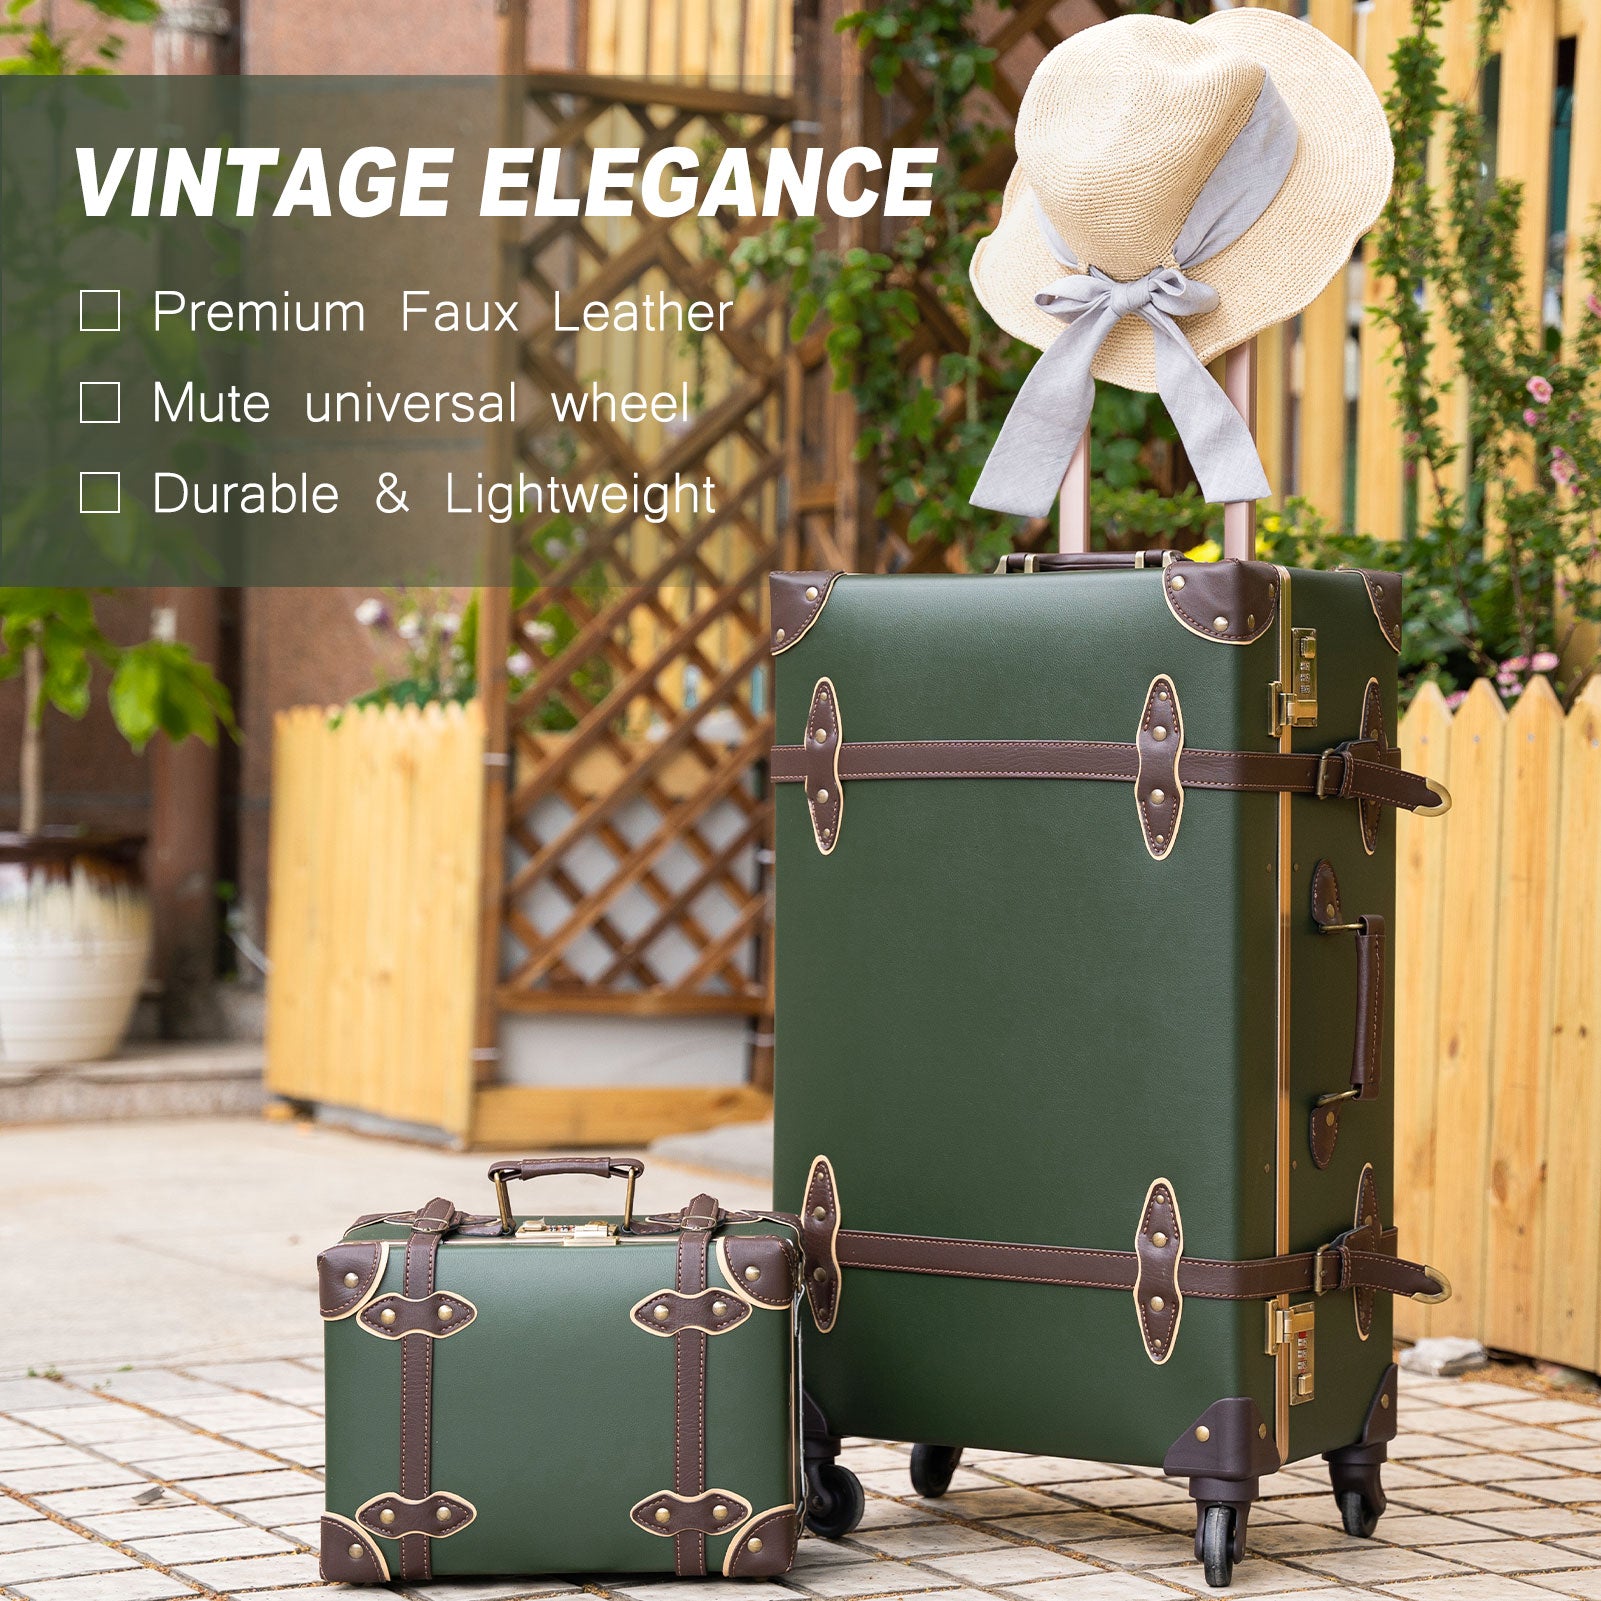 urecity Vintage Luggage Set of 2, Retro Suitcase Trunk with Wheels